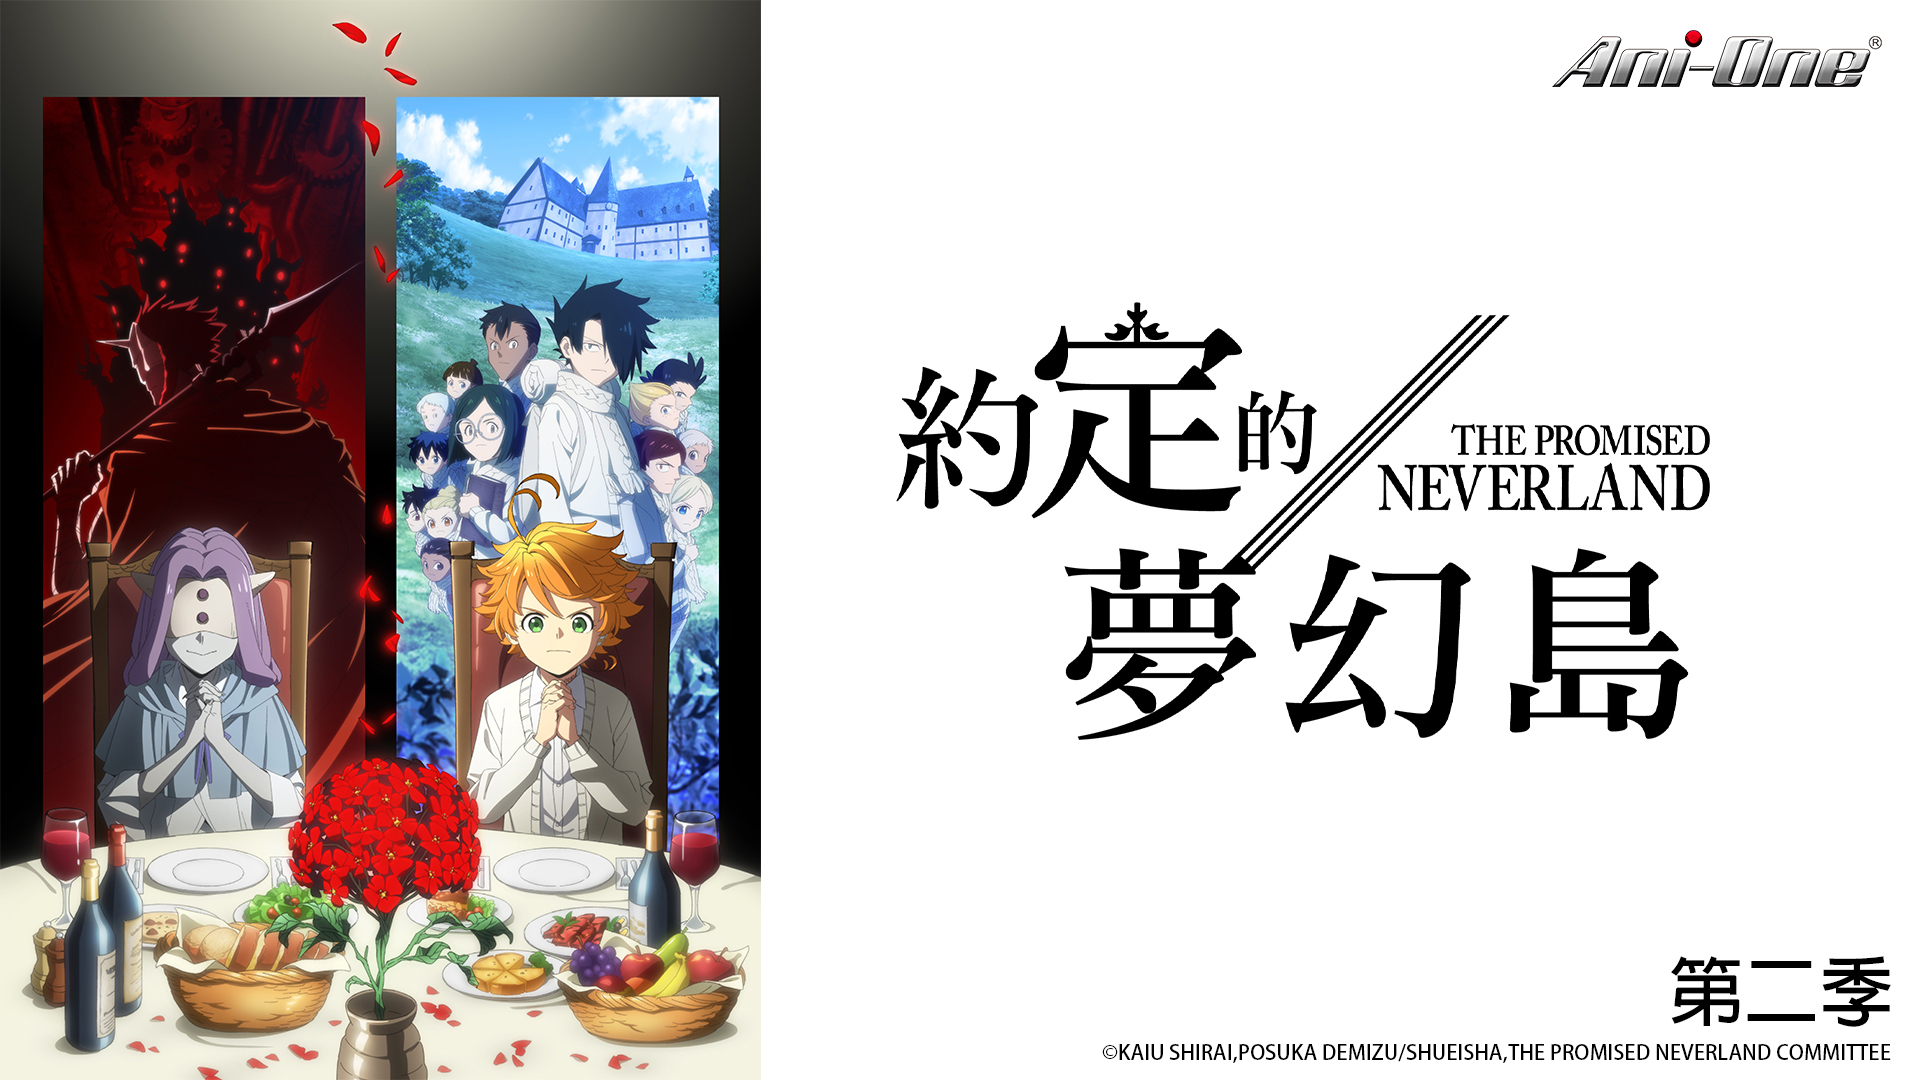 Episode 10 - The Promised Neverland Season 2 - Anime News Network